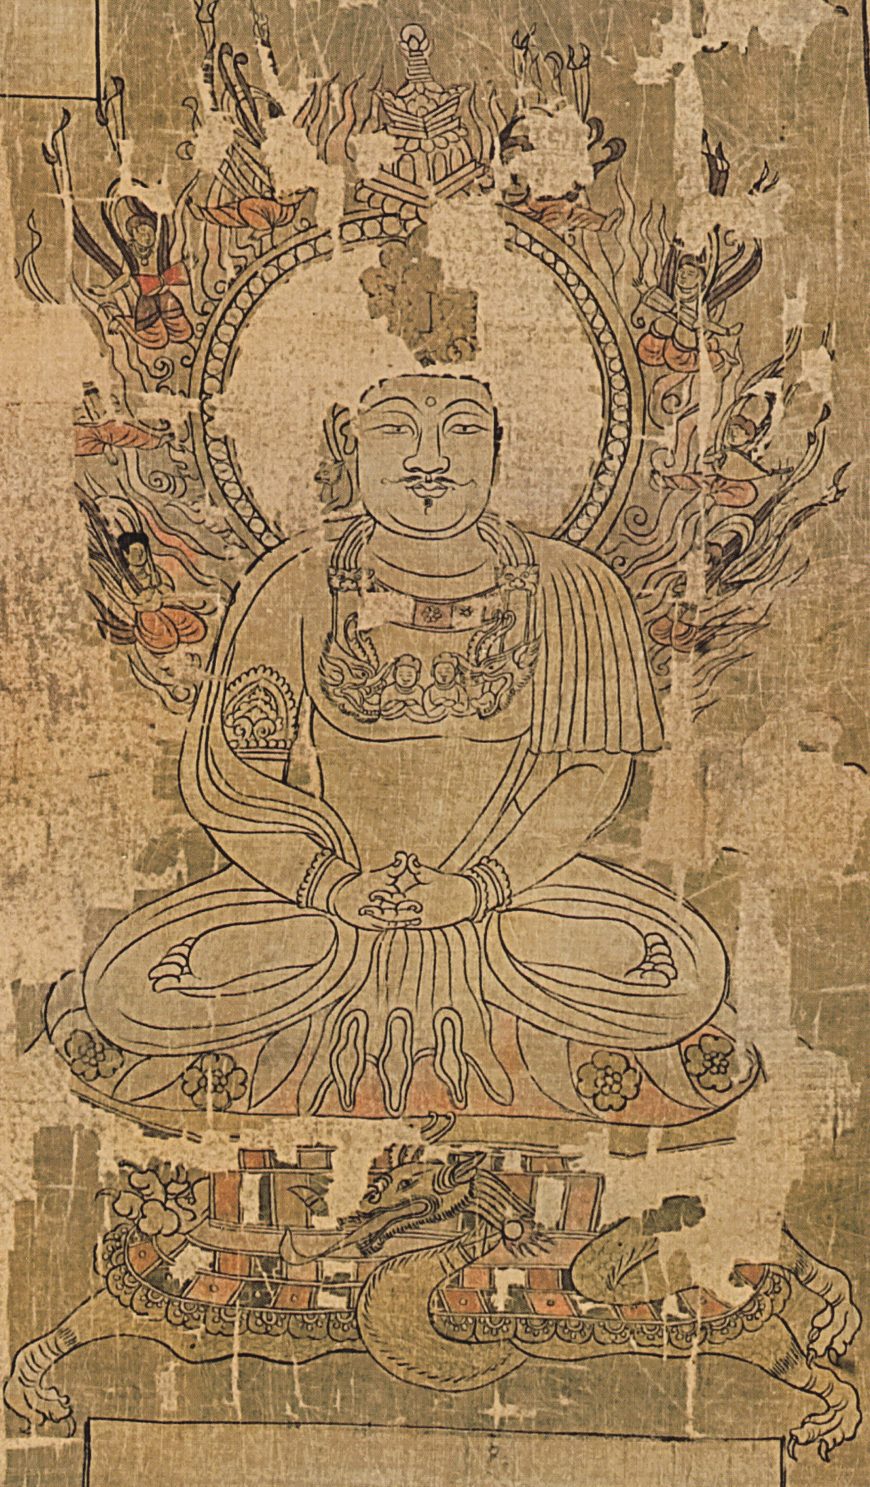 A seated buddha image, third row